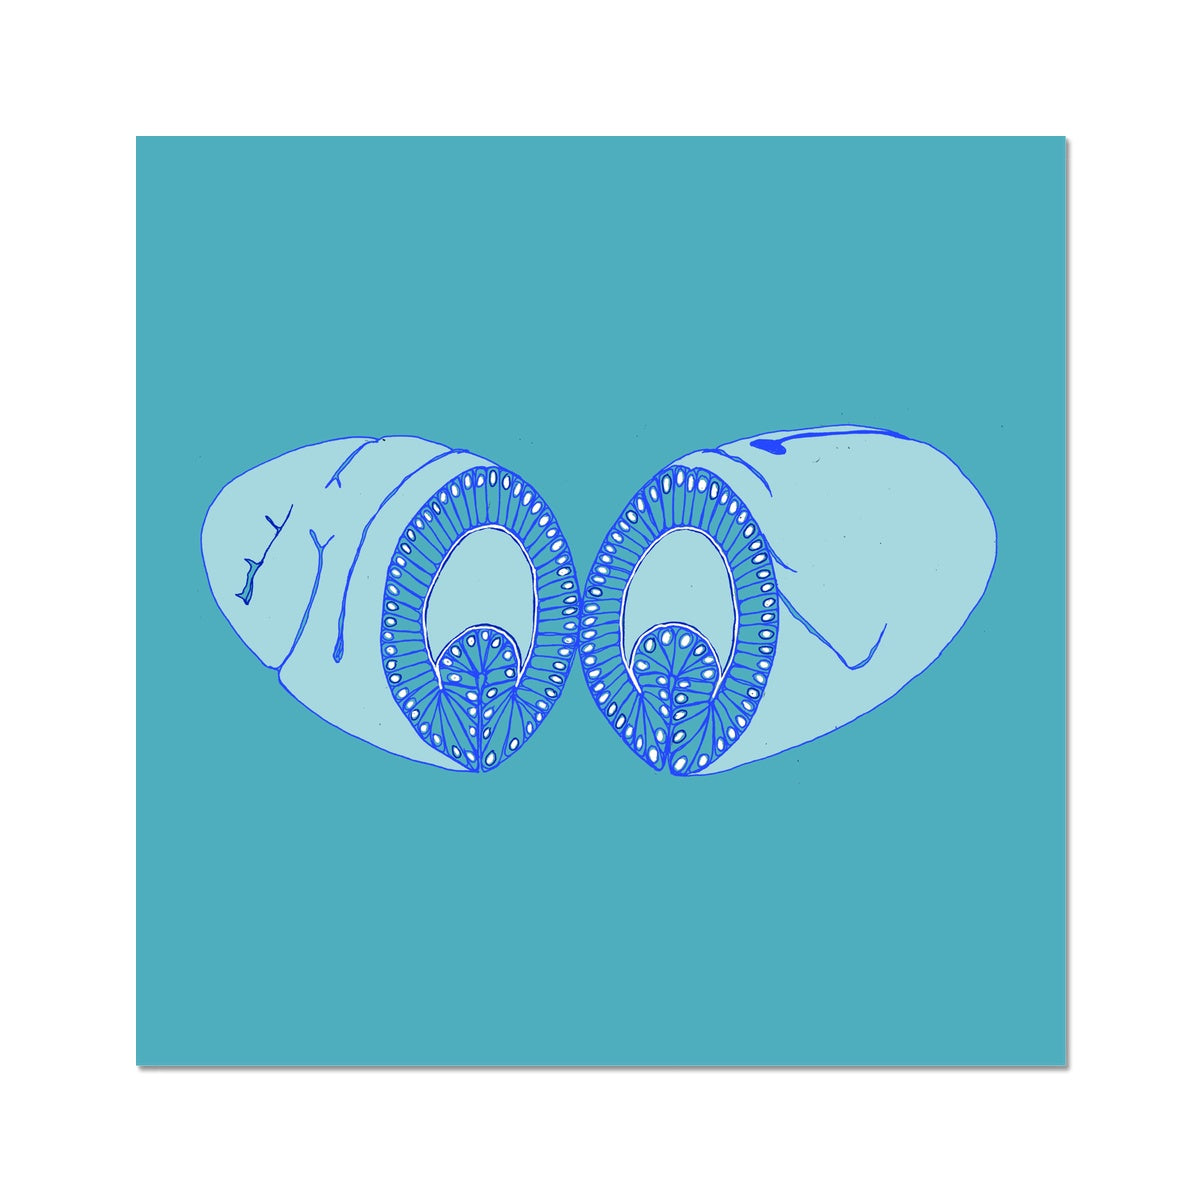 Drosophila Gastrulation Hahnemühle German Etching Print